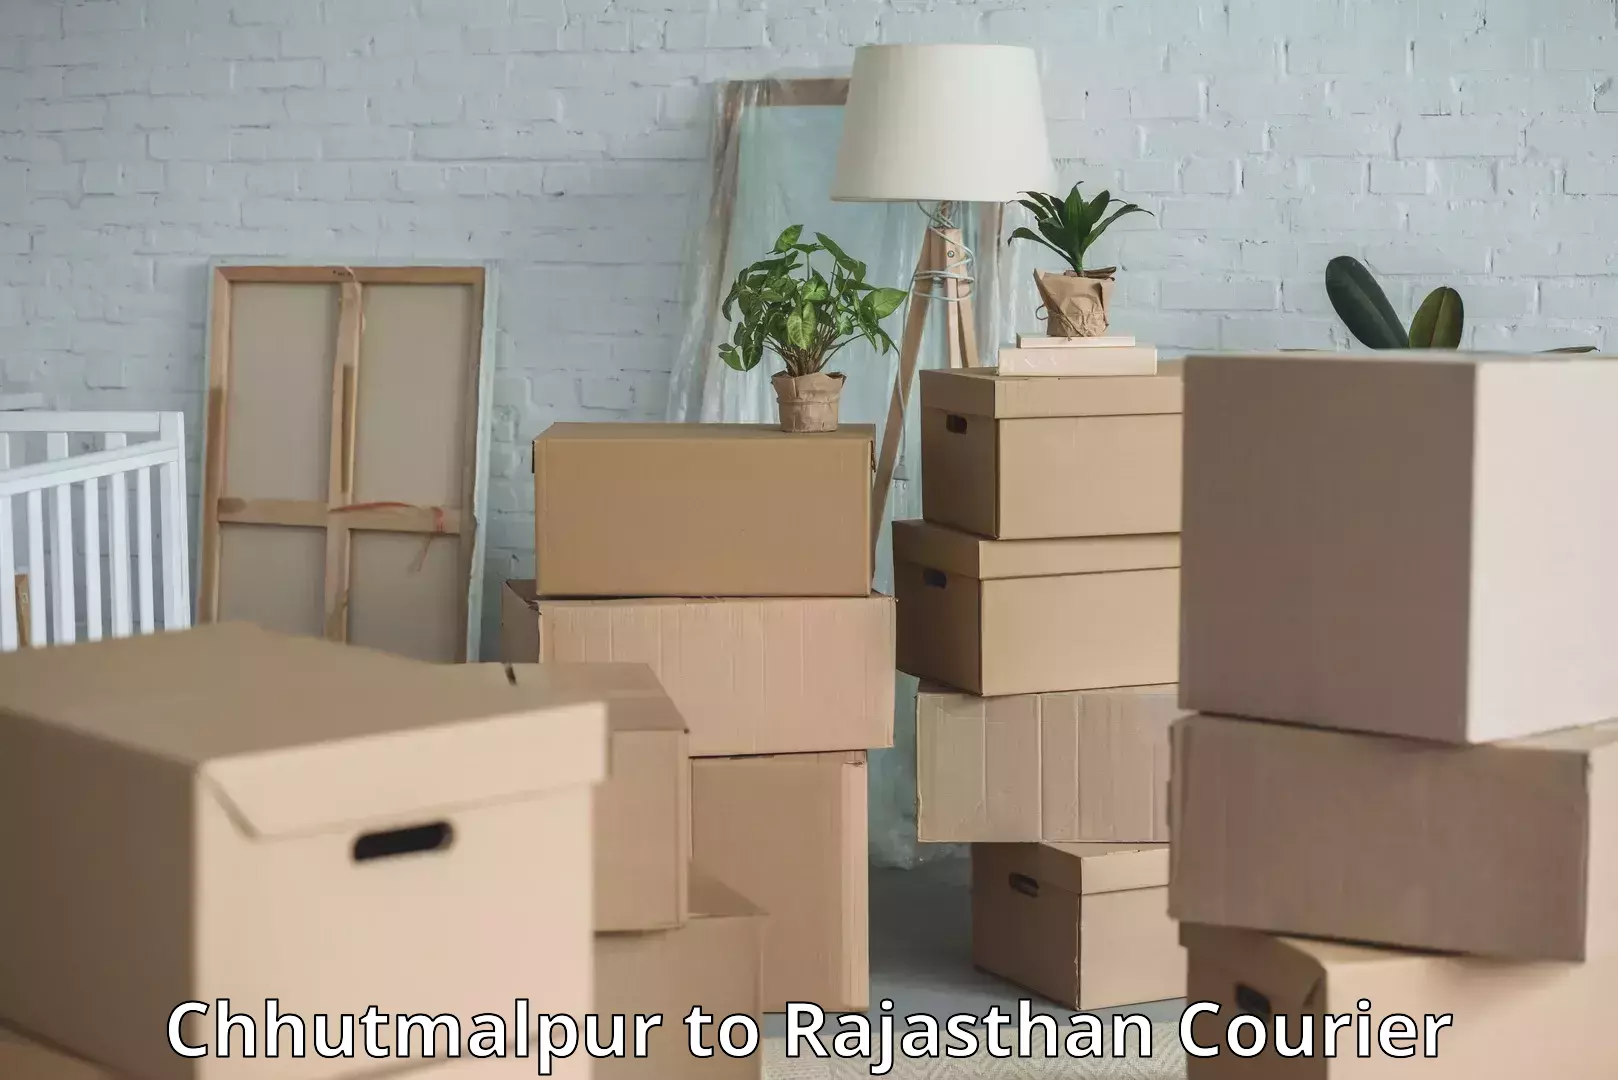 Luggage shipment specialists Chhutmalpur to Rajasthan